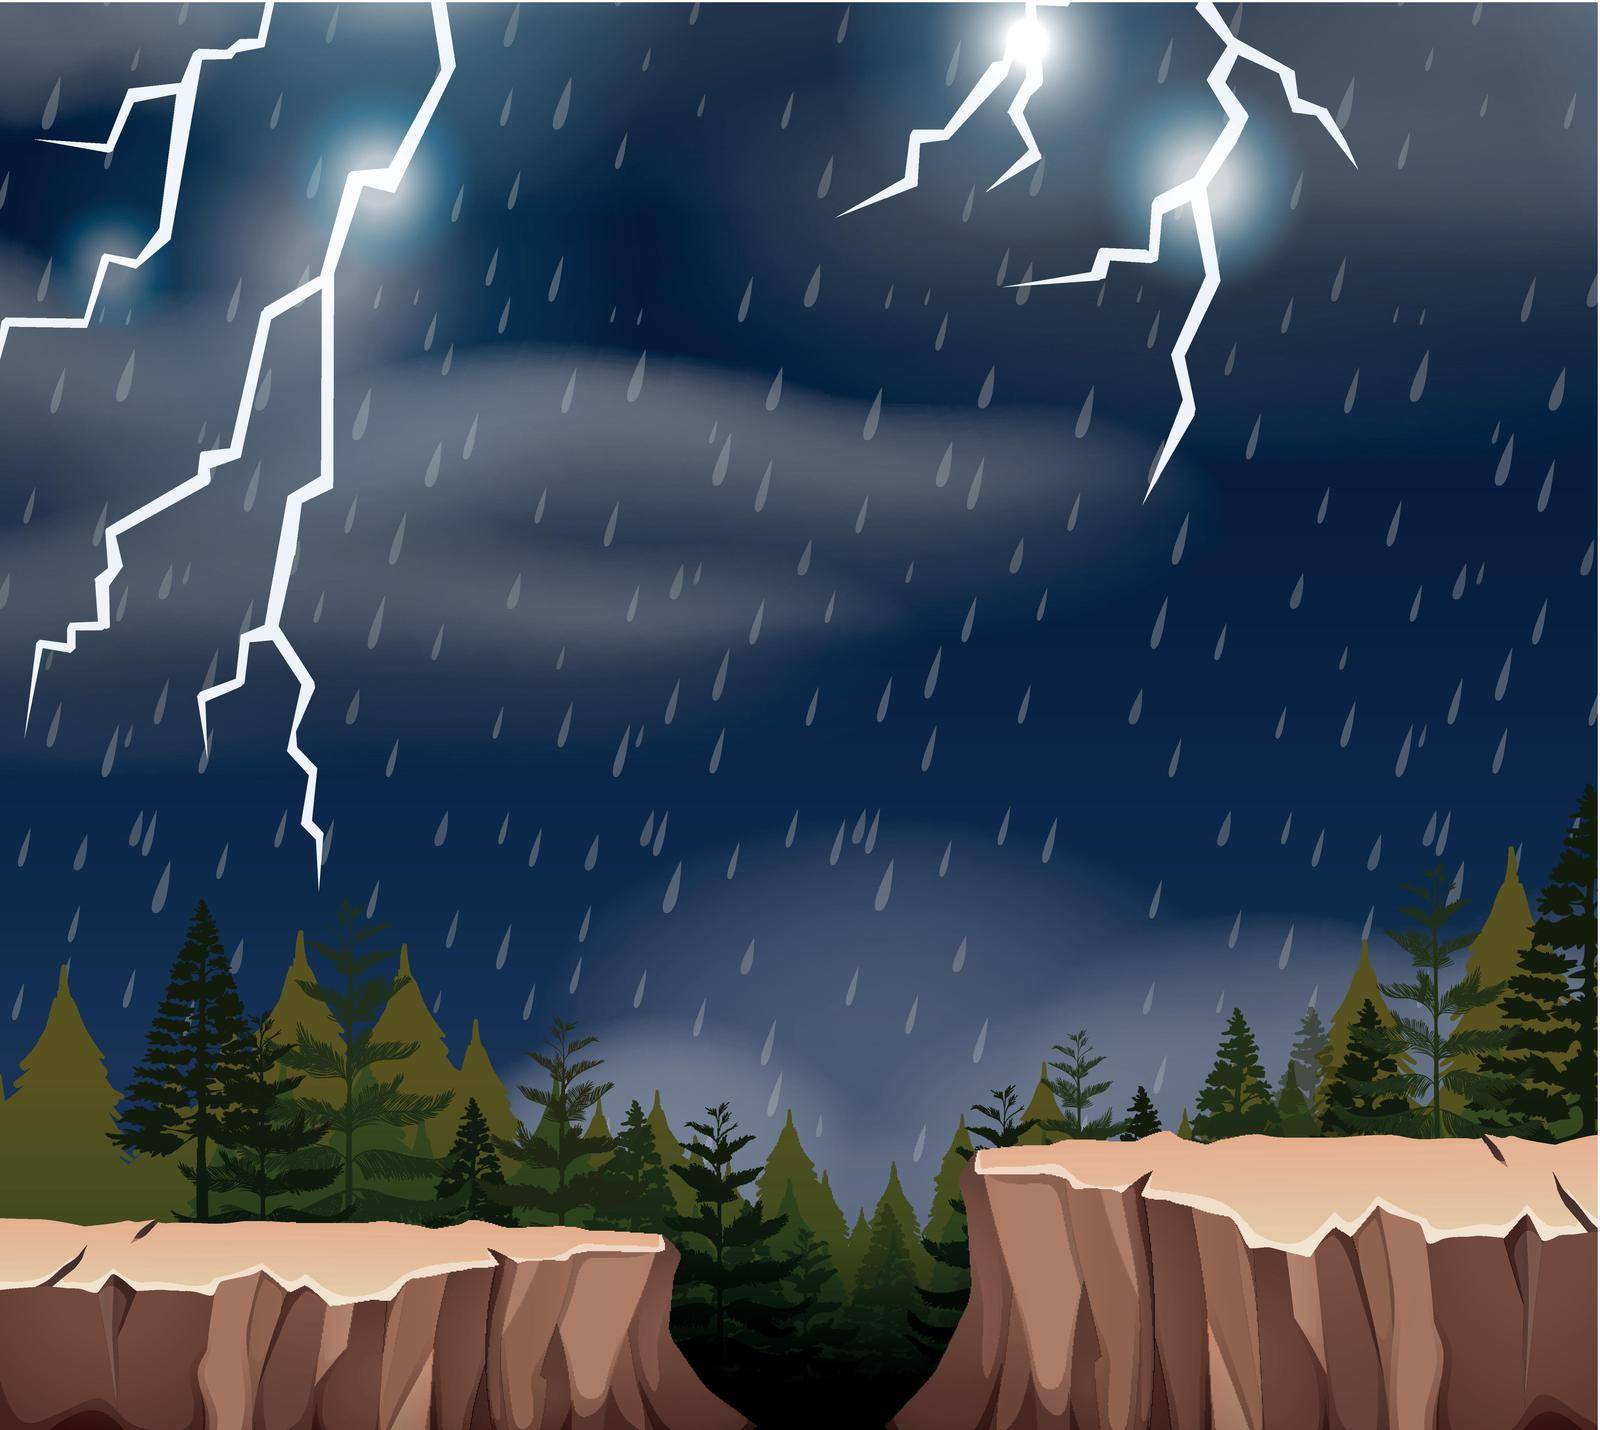 A thunderstorm night scene illustration